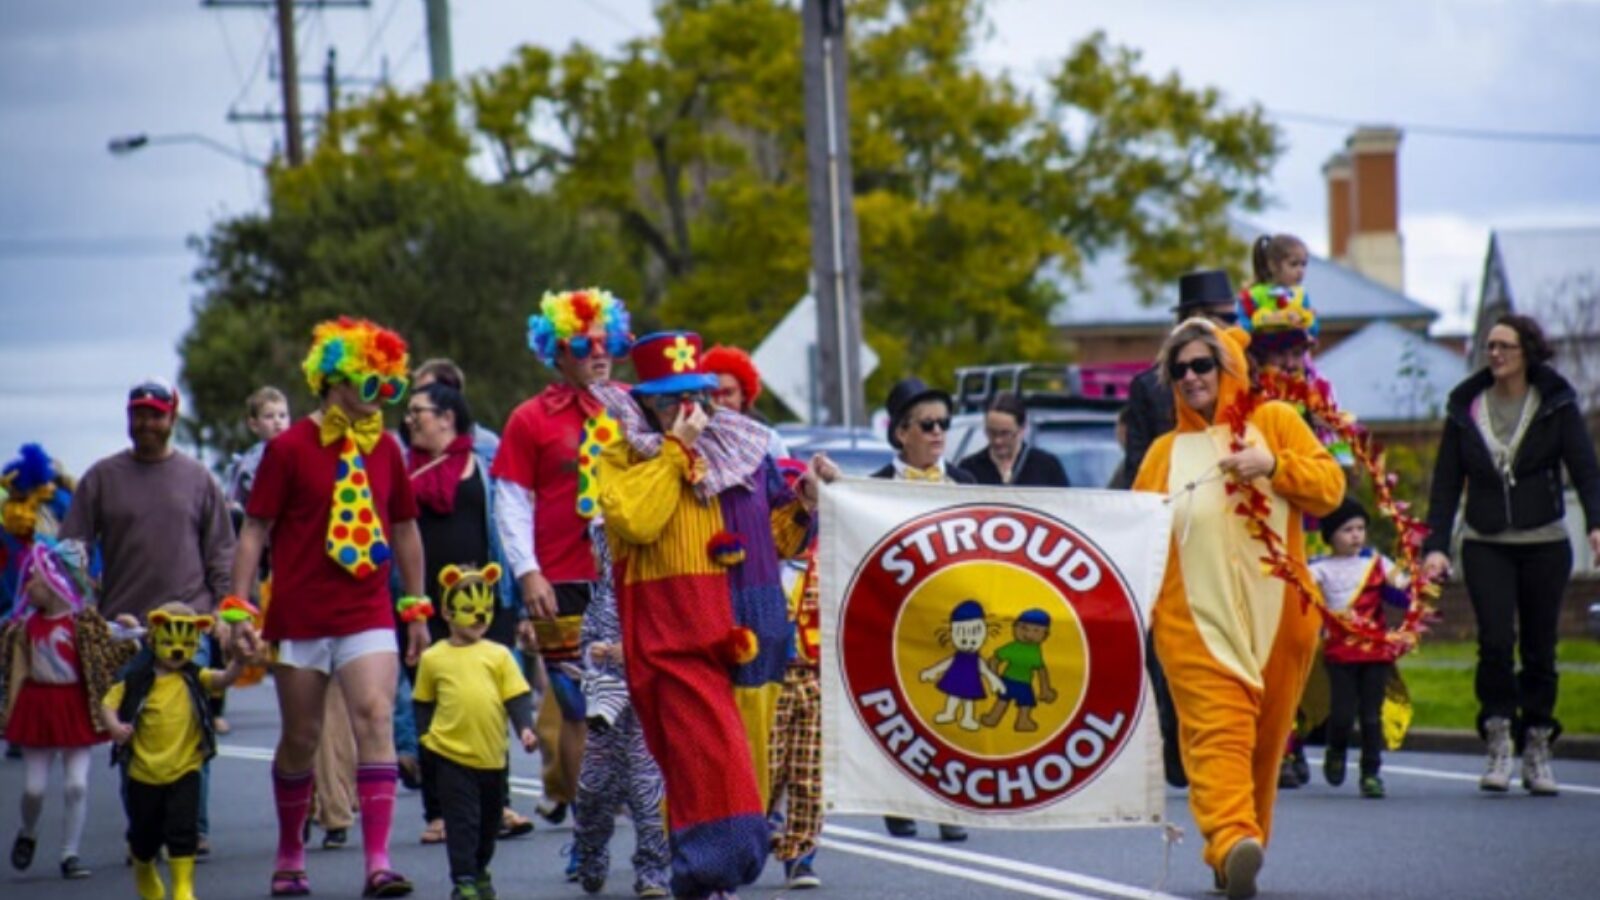 Stroud street parade